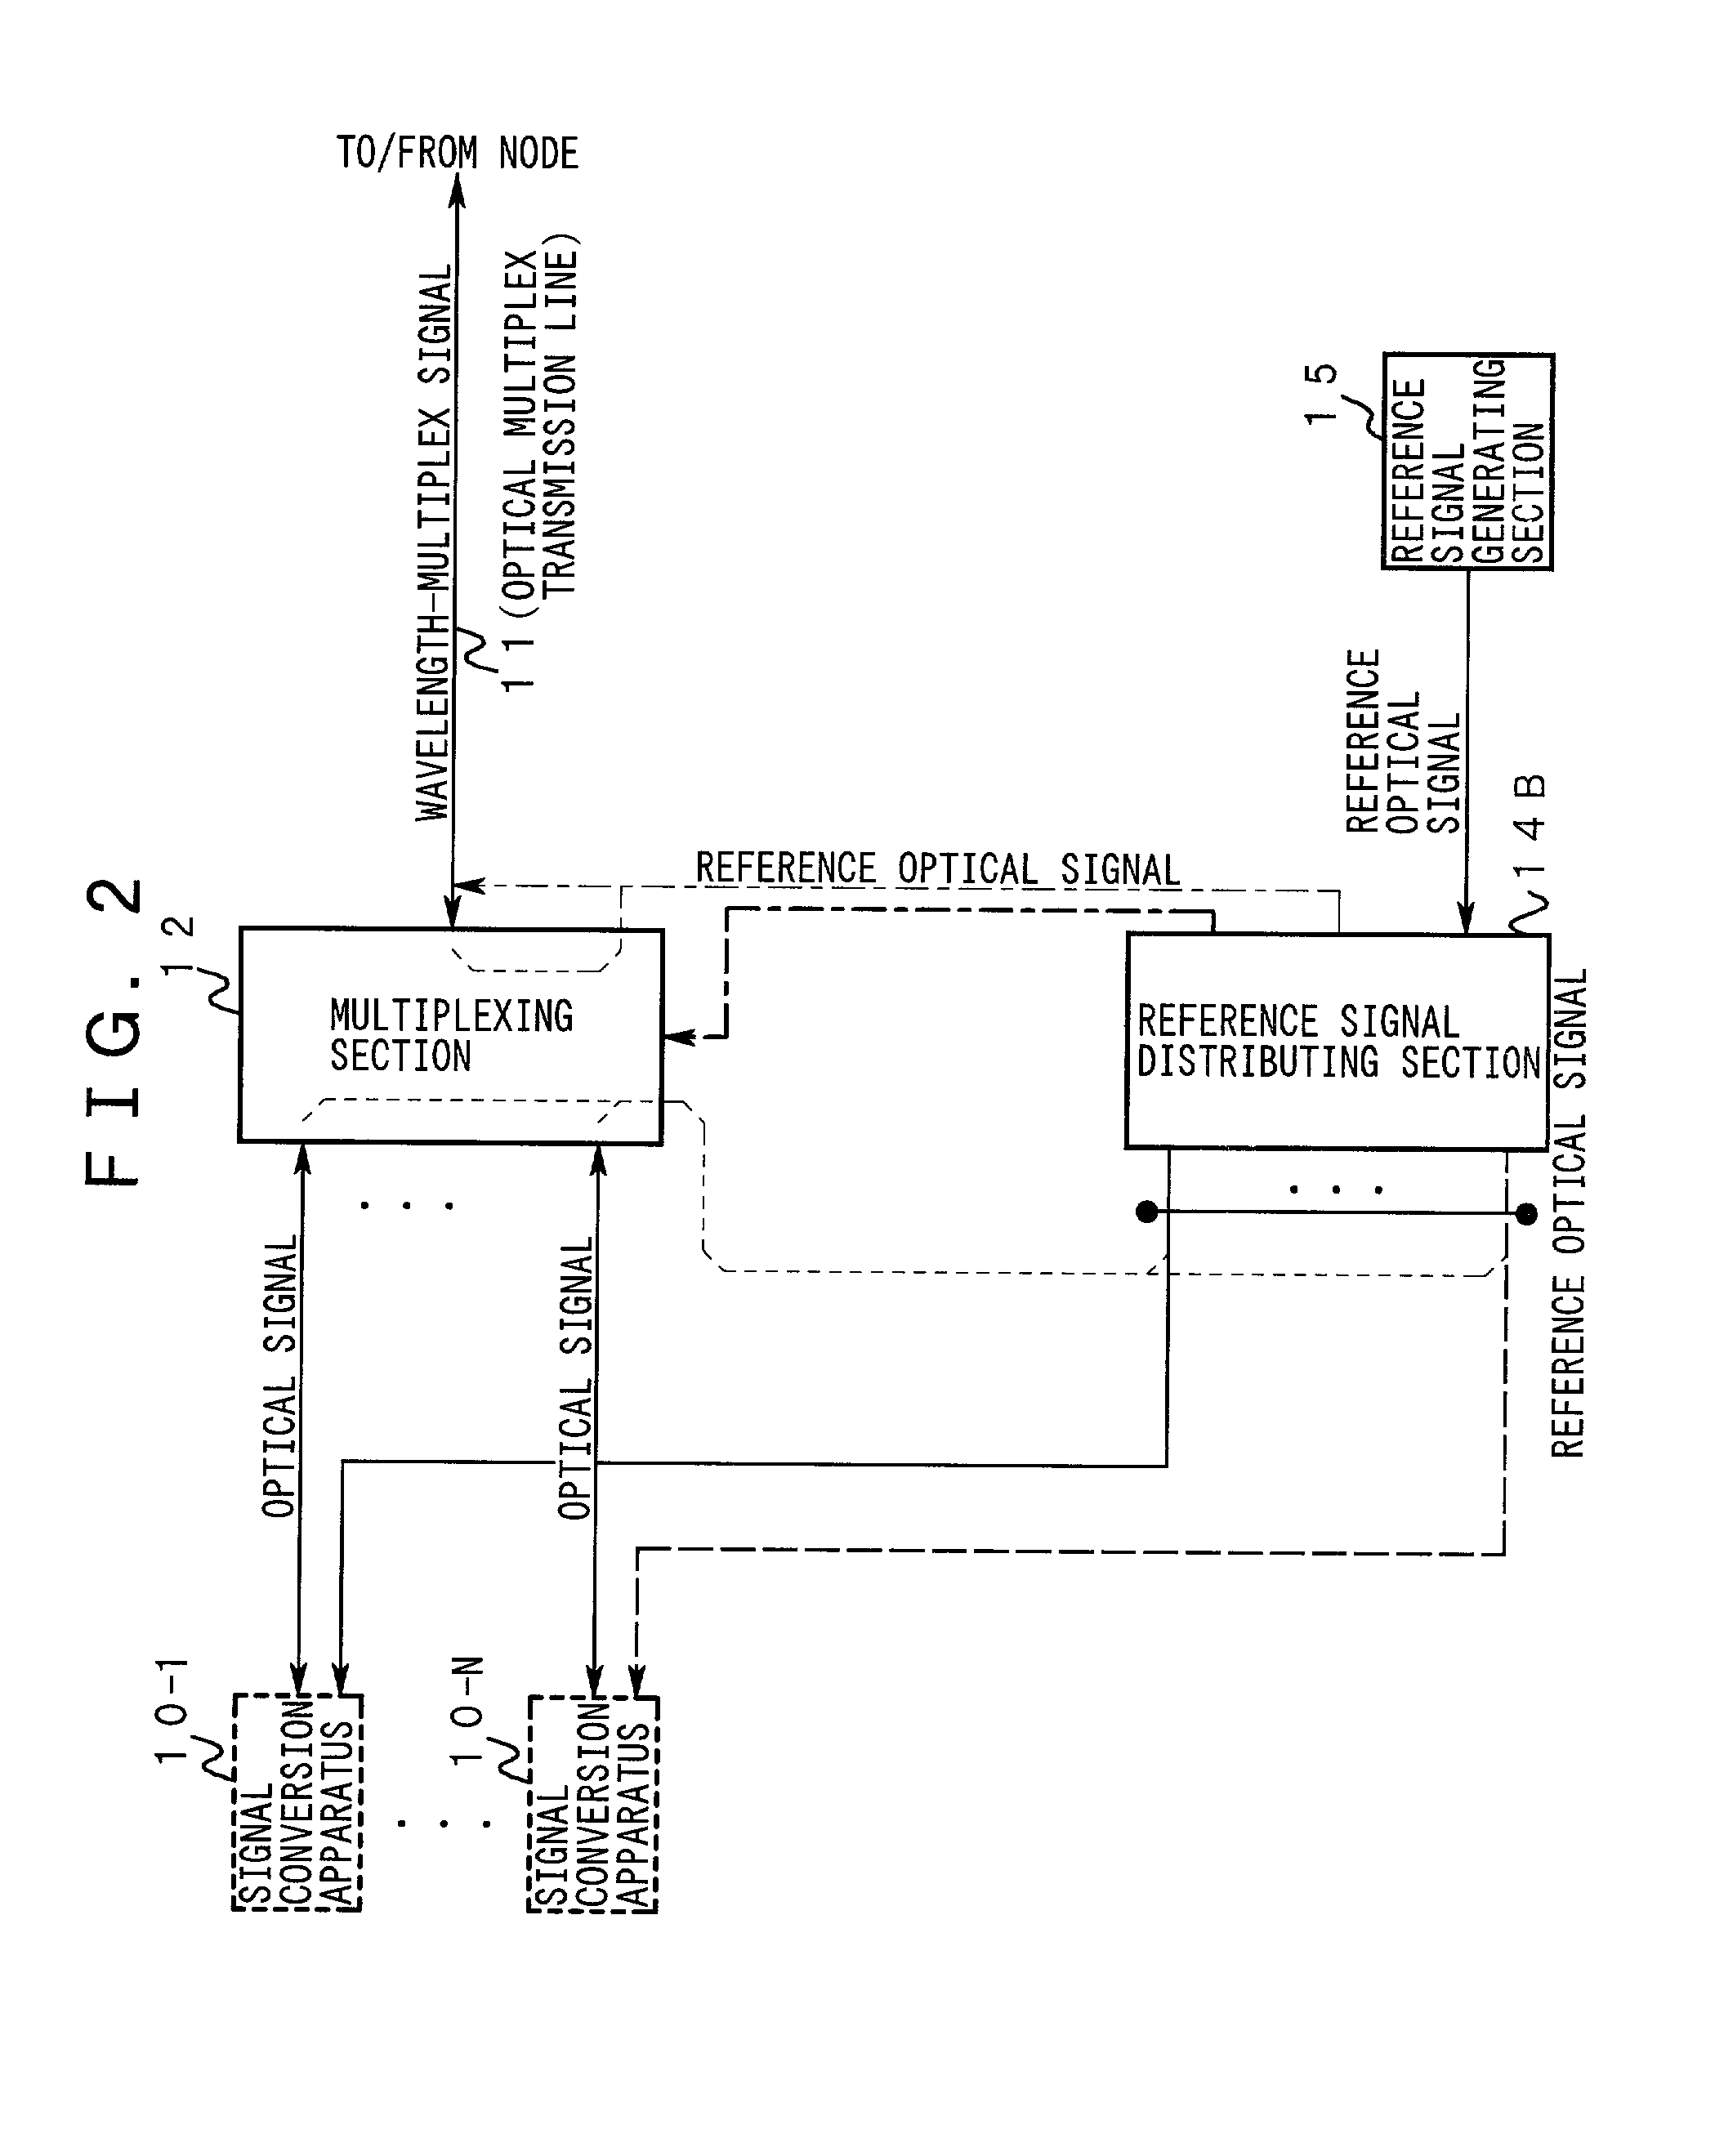 Wavelength multiplexing apparatus and signal conversion apparatus